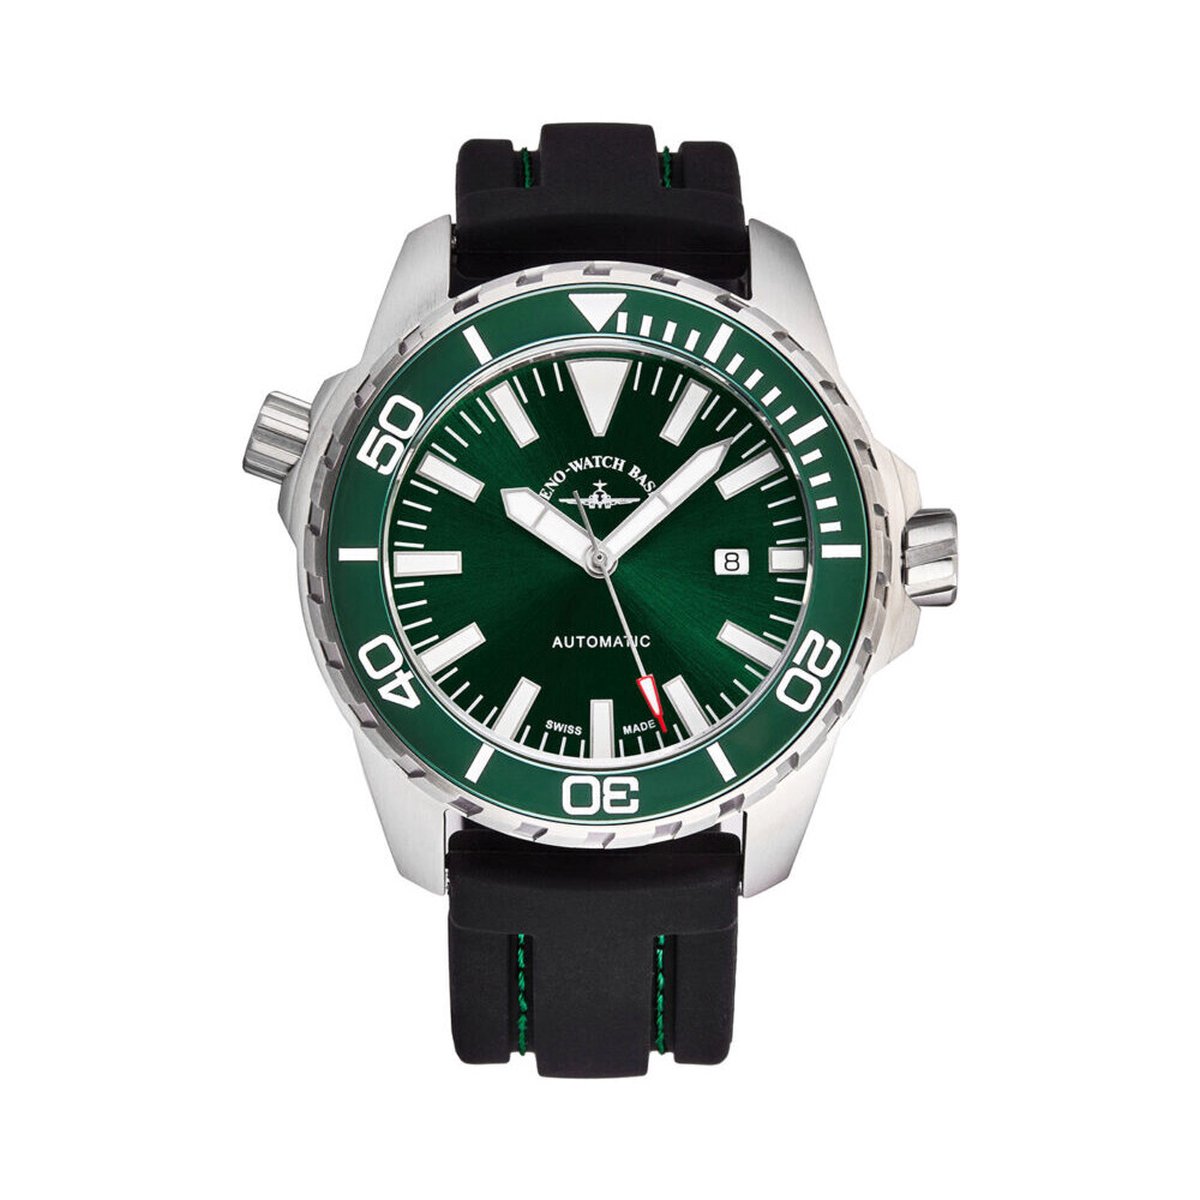 Zeno Watch Basel Herenhorloge 6603-2824-a8